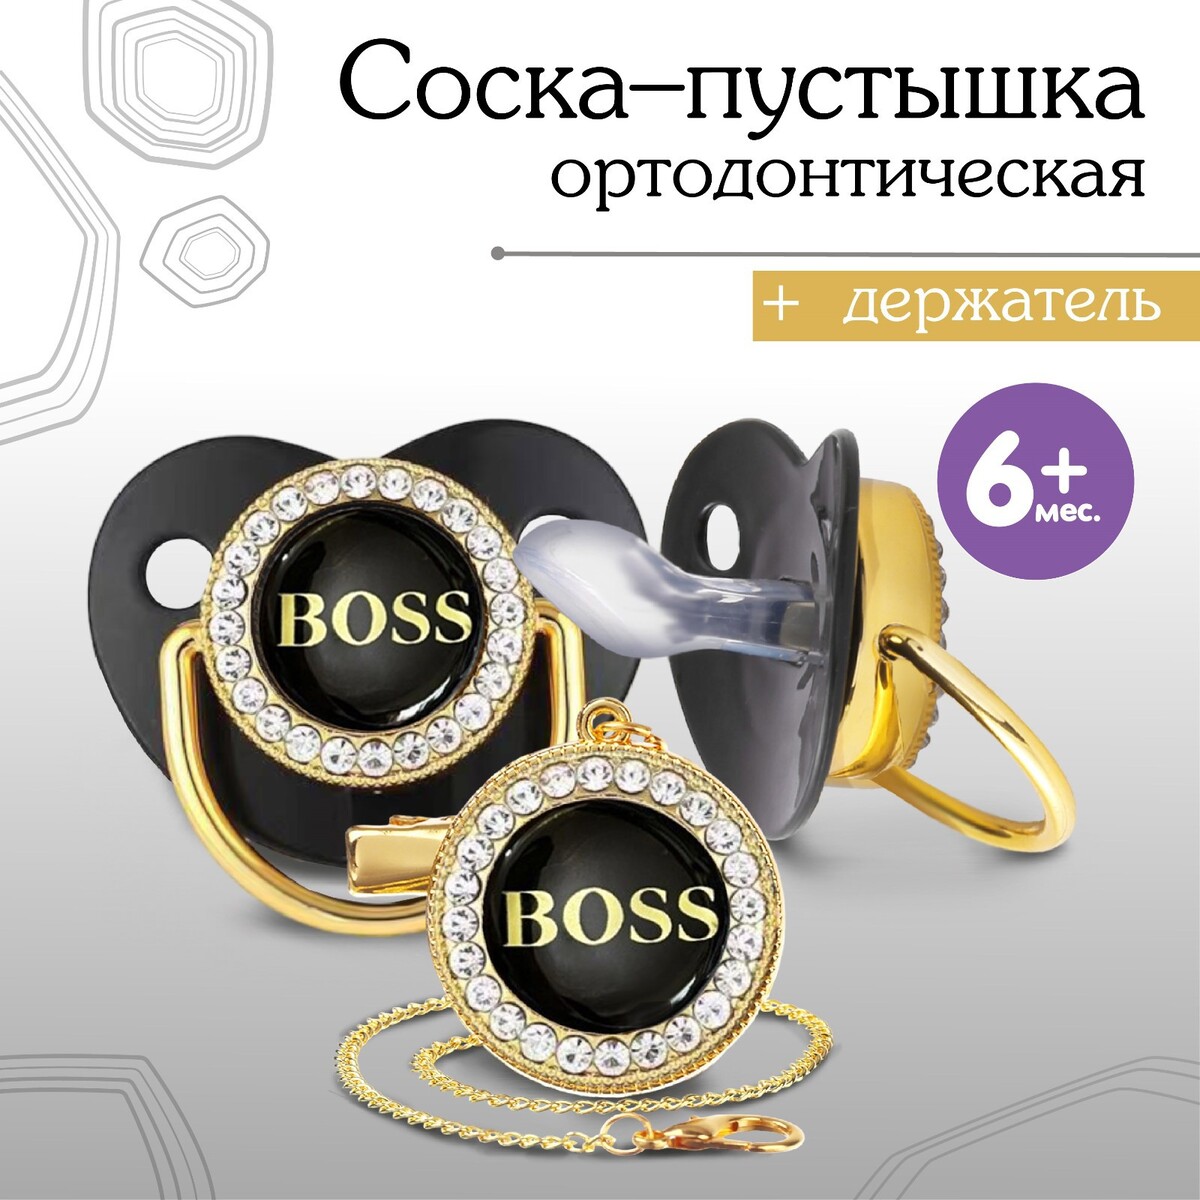 :  -  ,  - . boss,  , +6., /, 